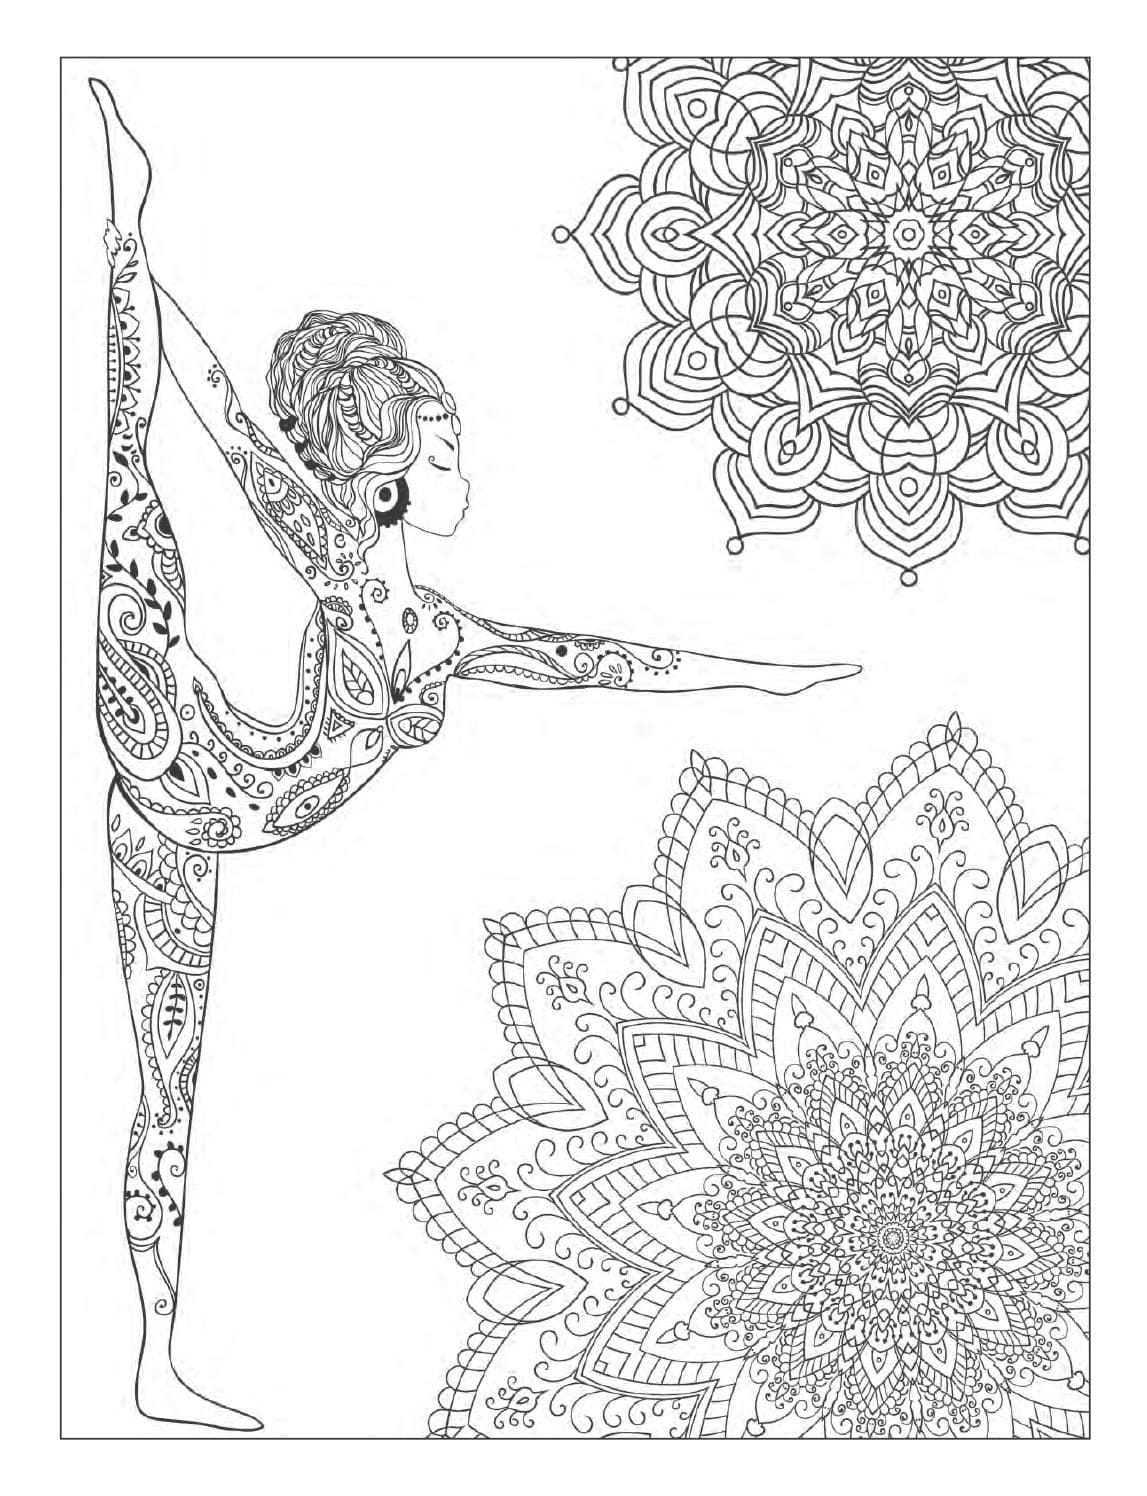 Yoga Poses And Mandalas